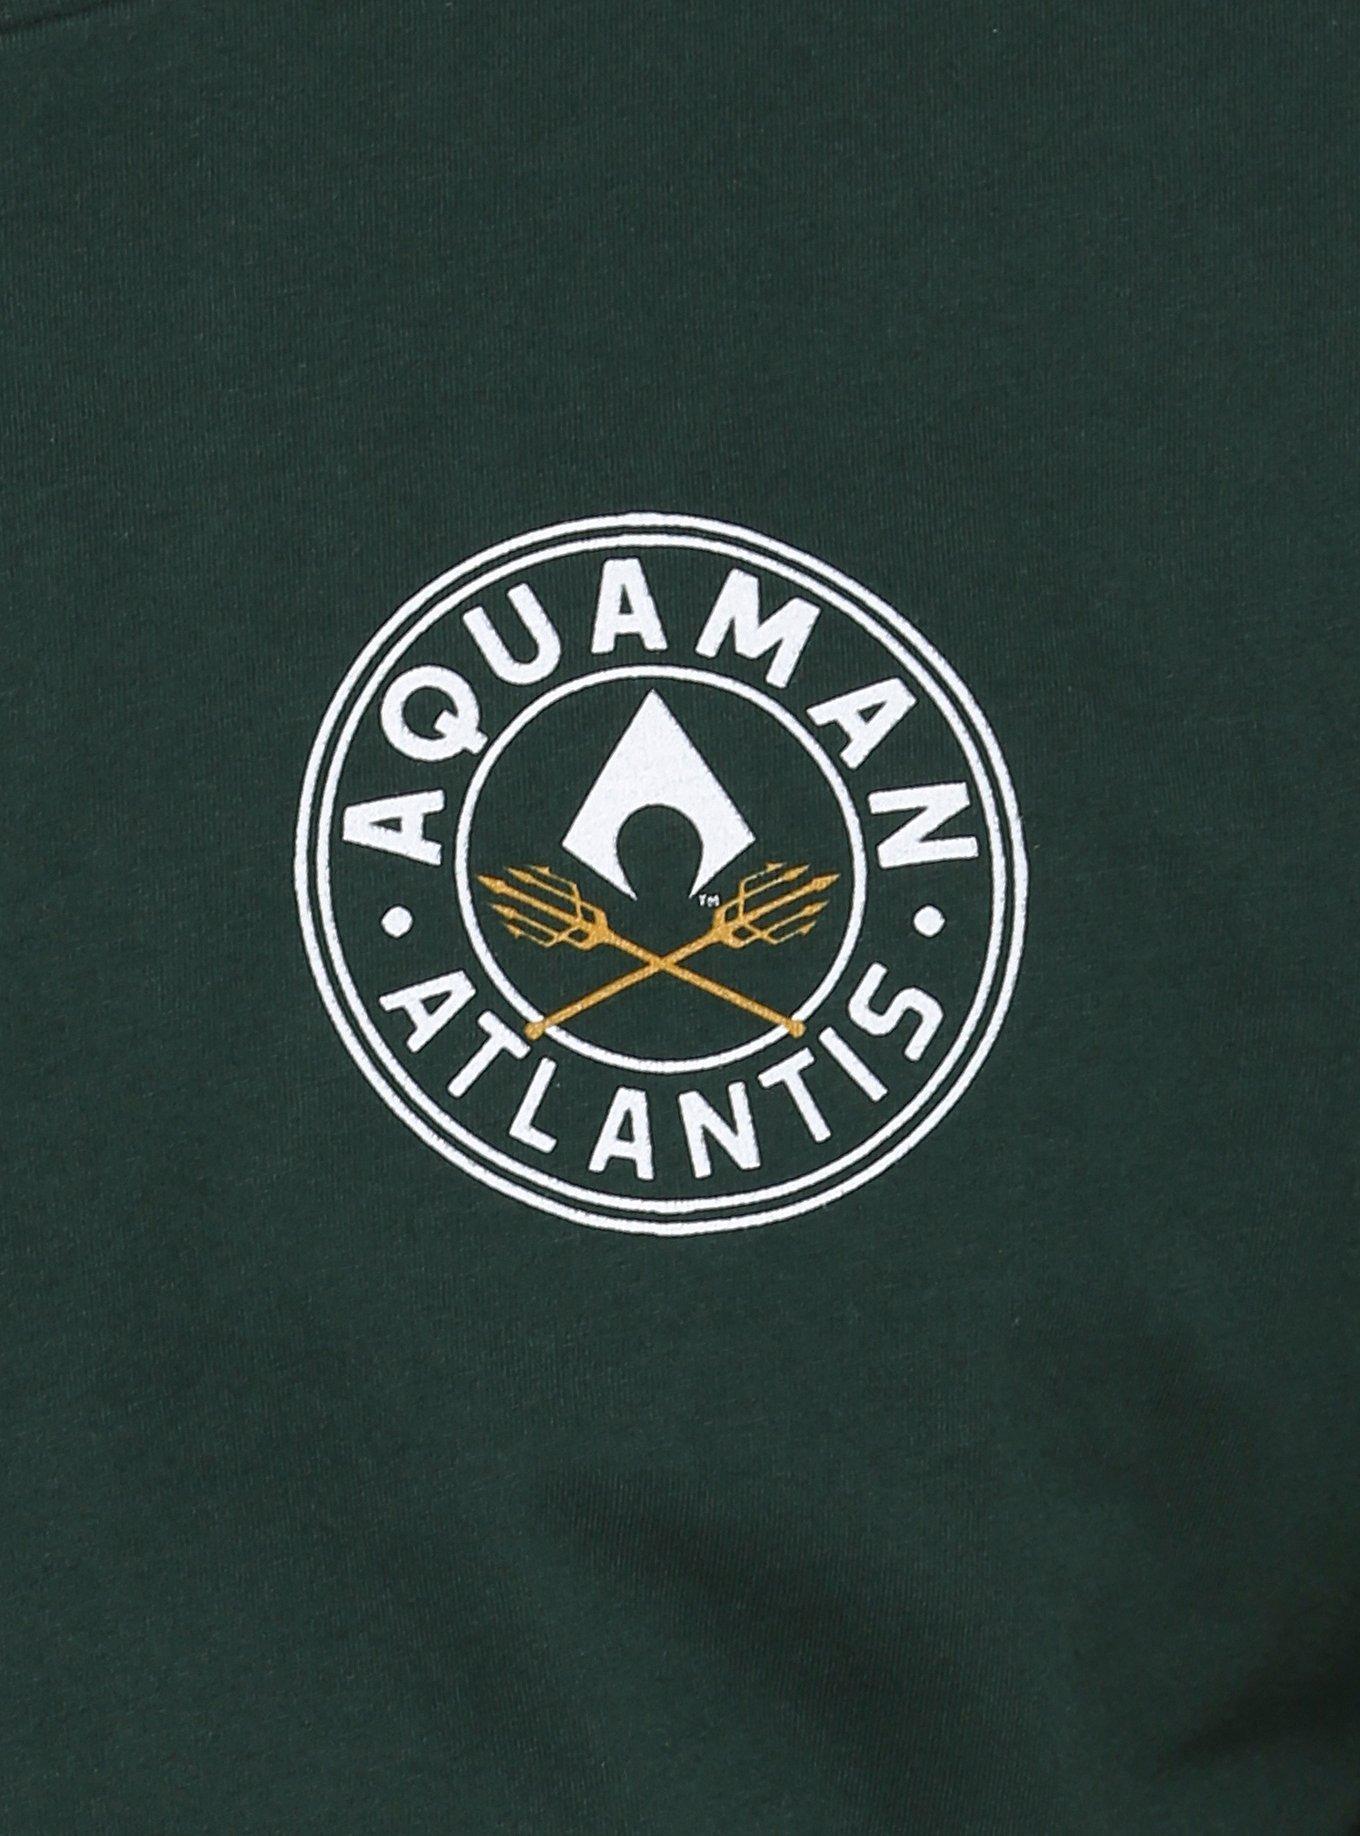 DC Comics Aquaman Atlantis Tridents T-Shirt, , alternate